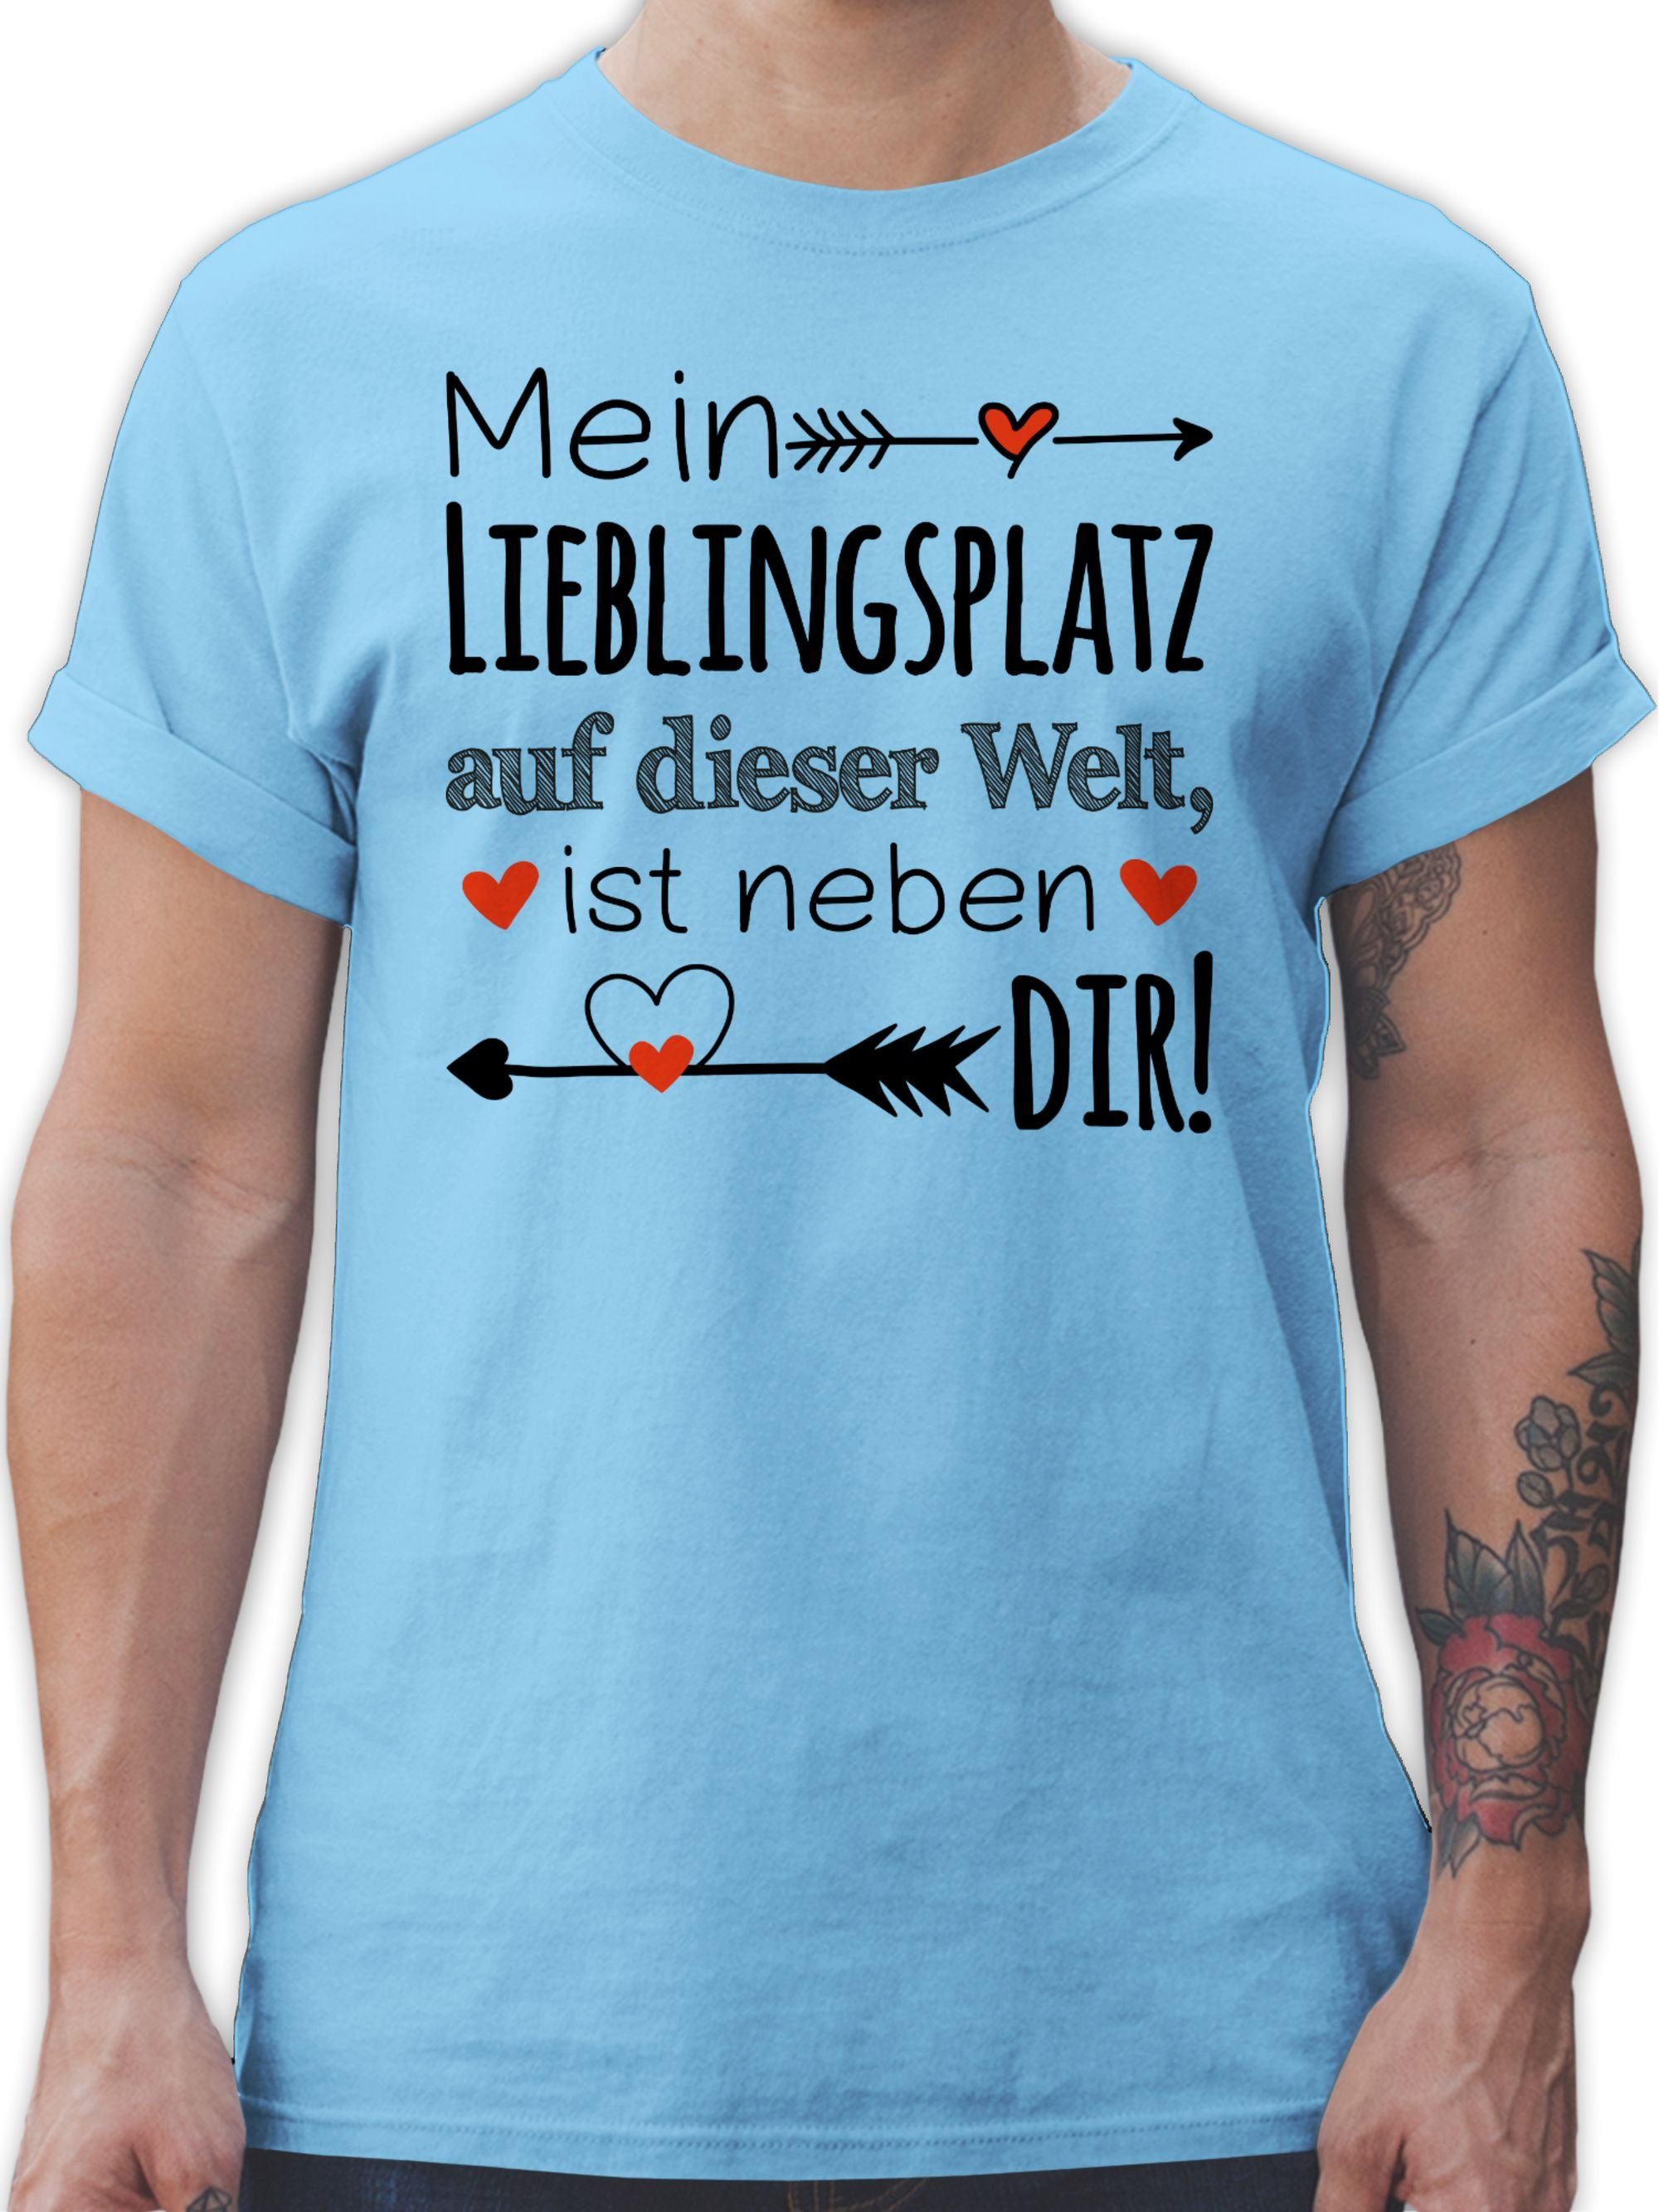 1 - Geschenk Partner Hellblau T-Shirt Liebeserklärung Beziehung Liebe Valentinstag Partner Lieblingsplatz Partnerin Shirtracer